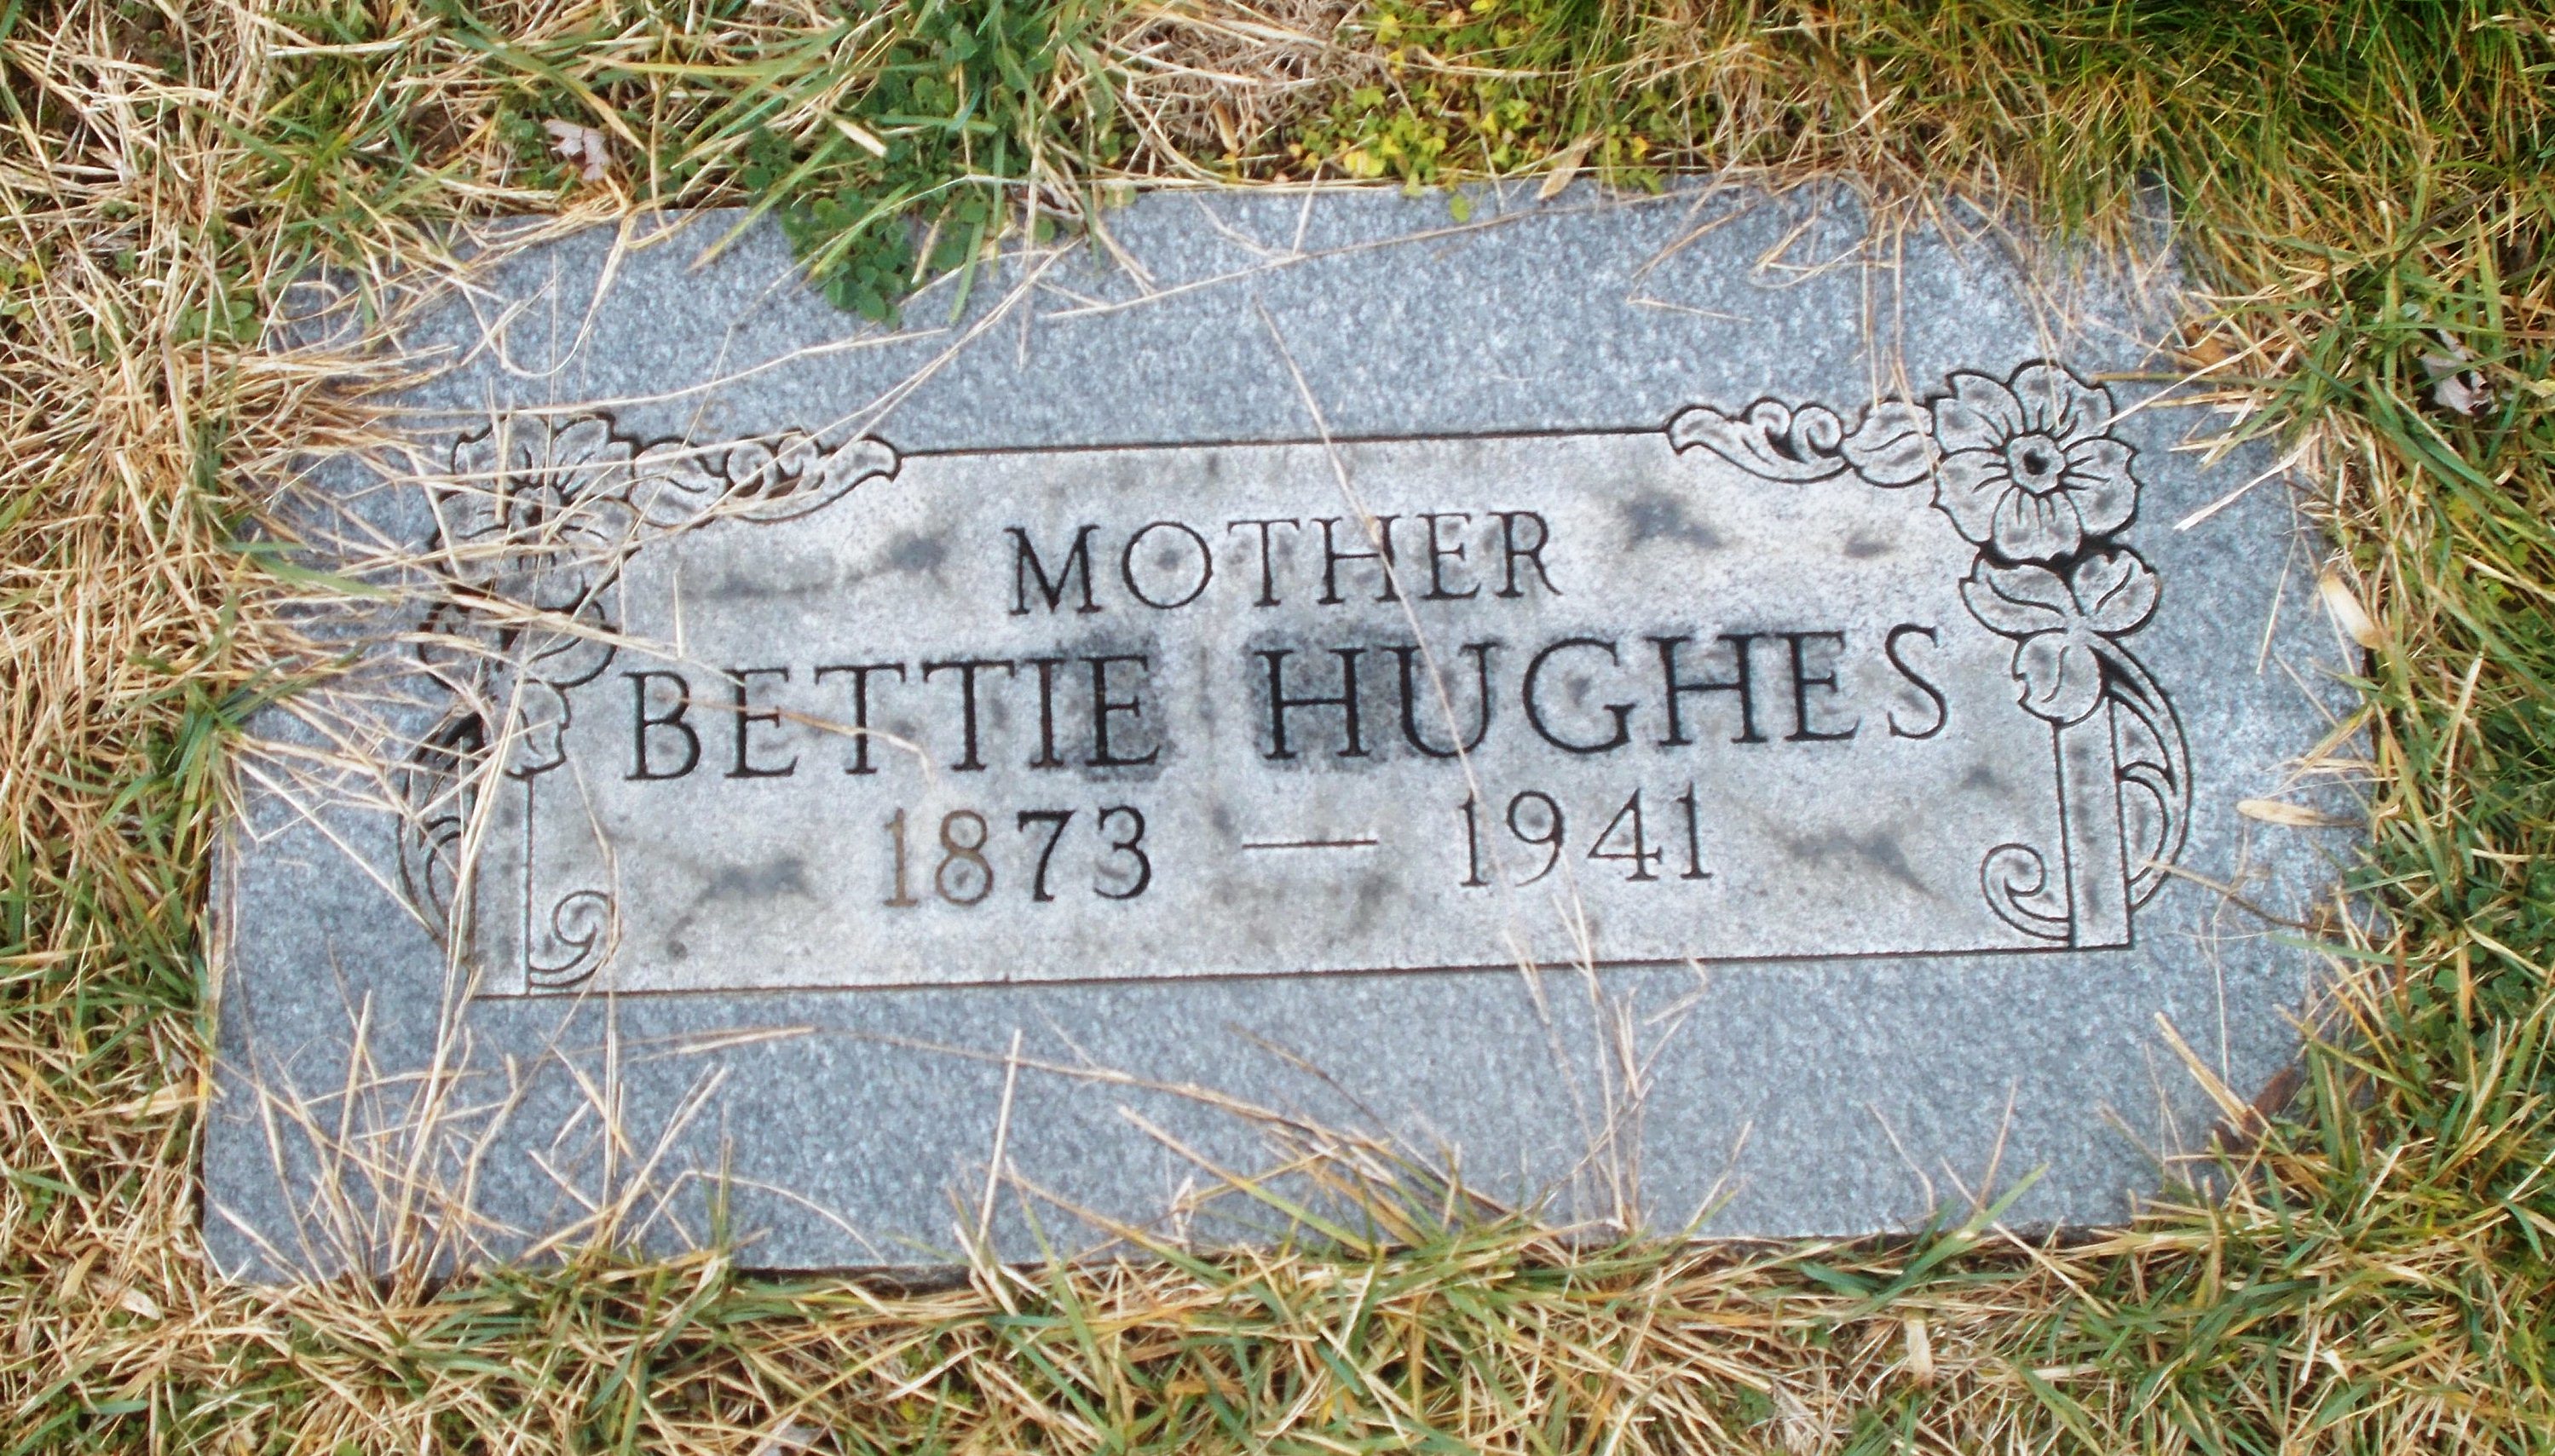 Bettie Hughes